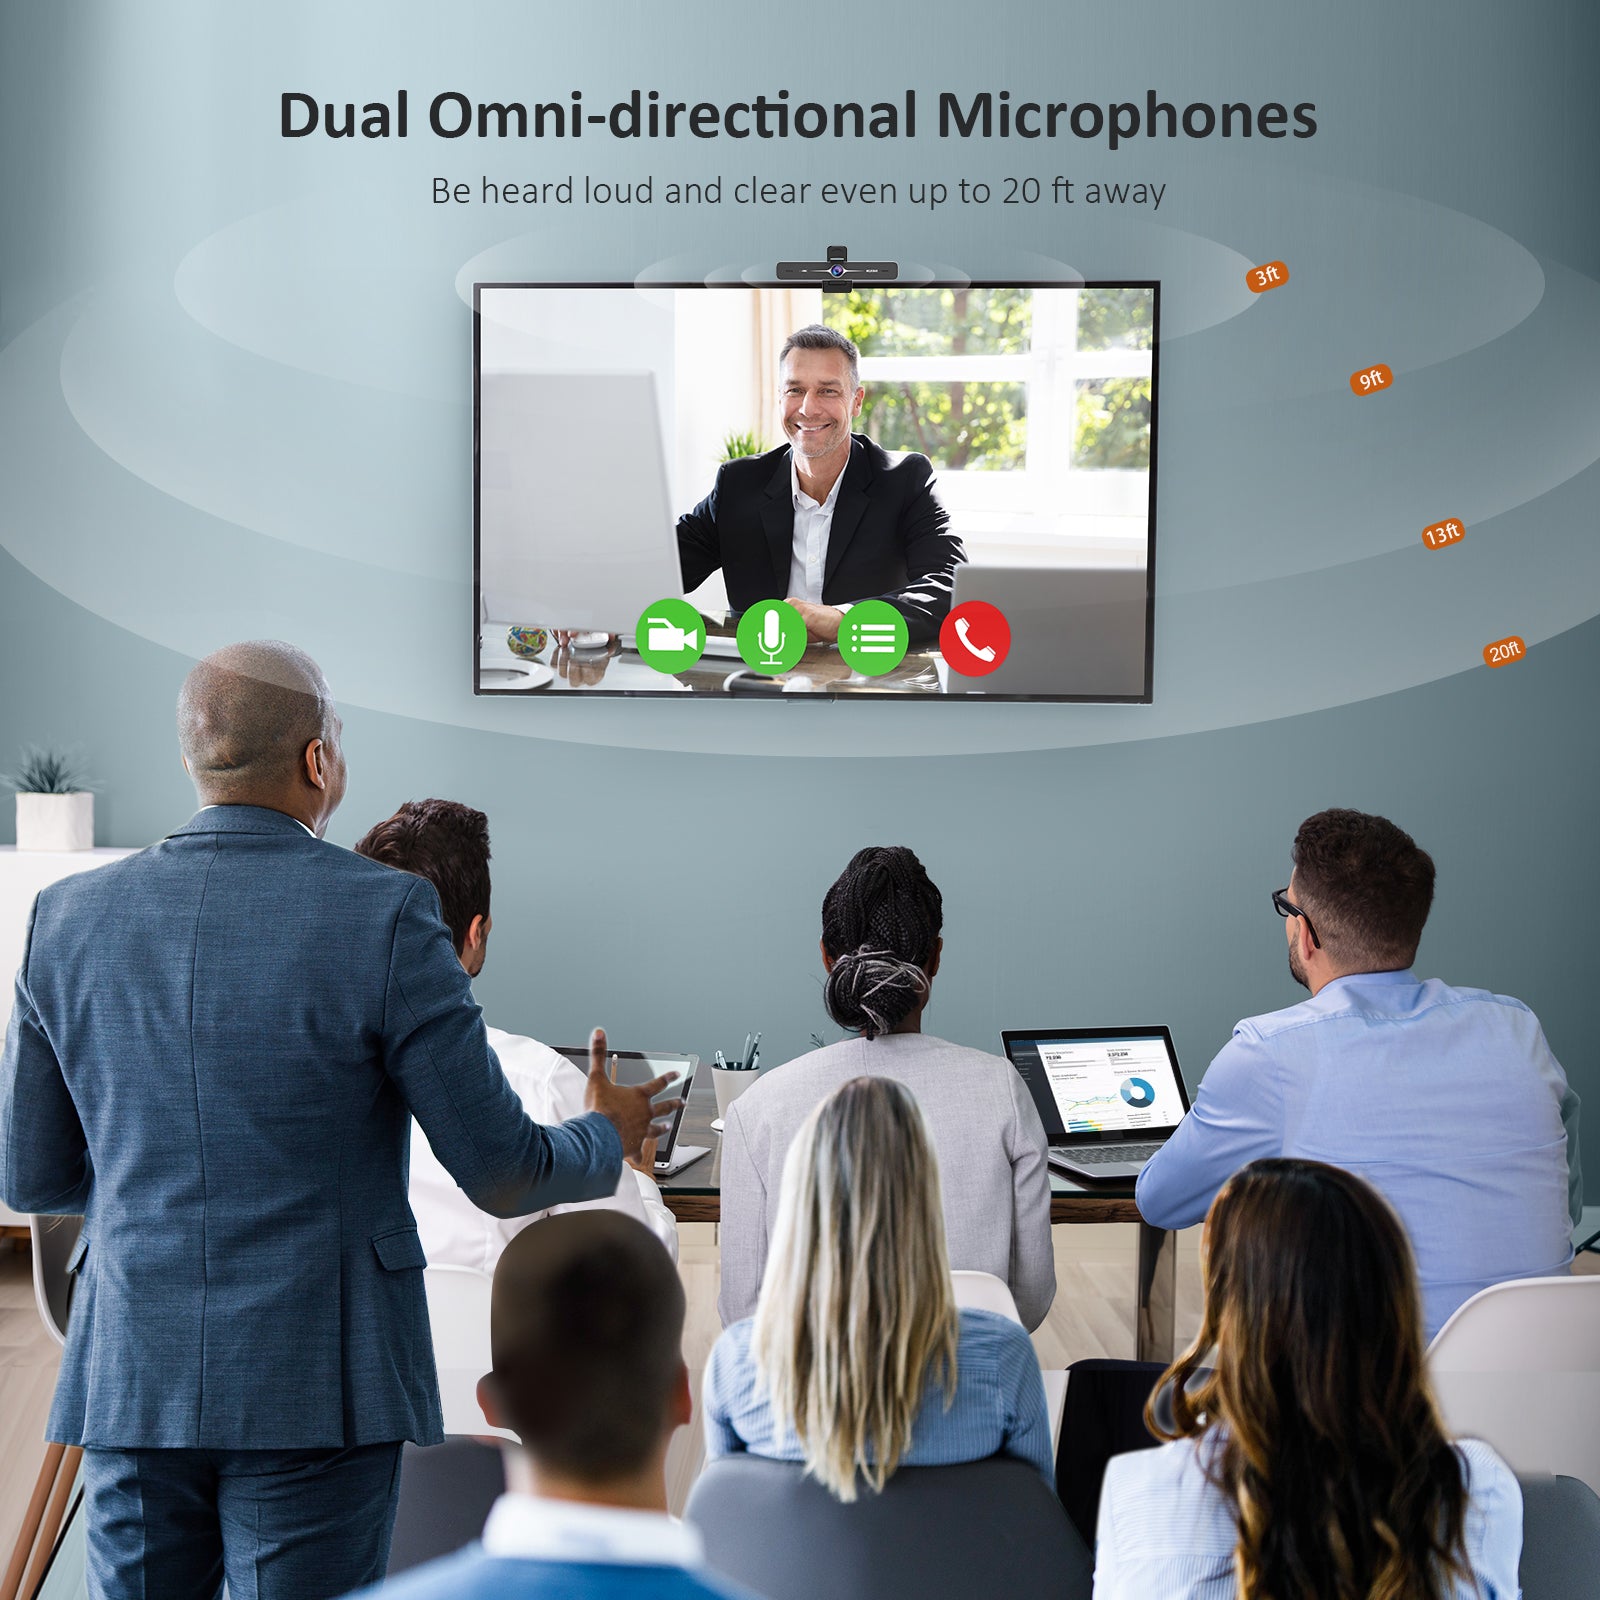 Webcam with Dual Omnidirectional Microphones, captures audio up to 20ft away.